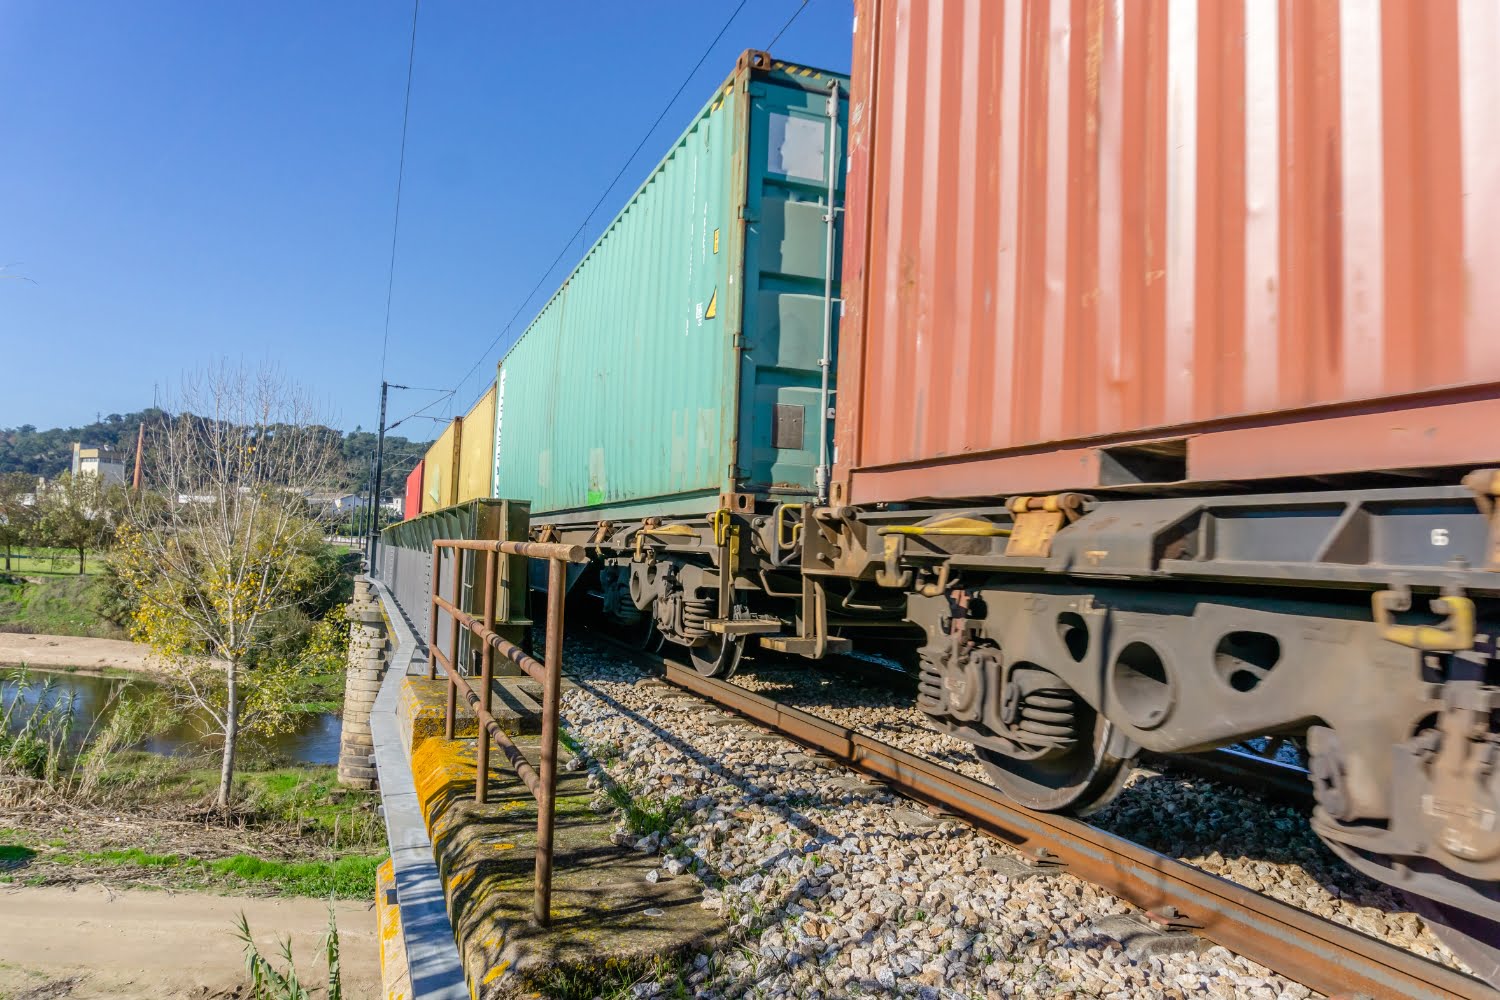 intermodal rail transportation train and box cars hauling goods